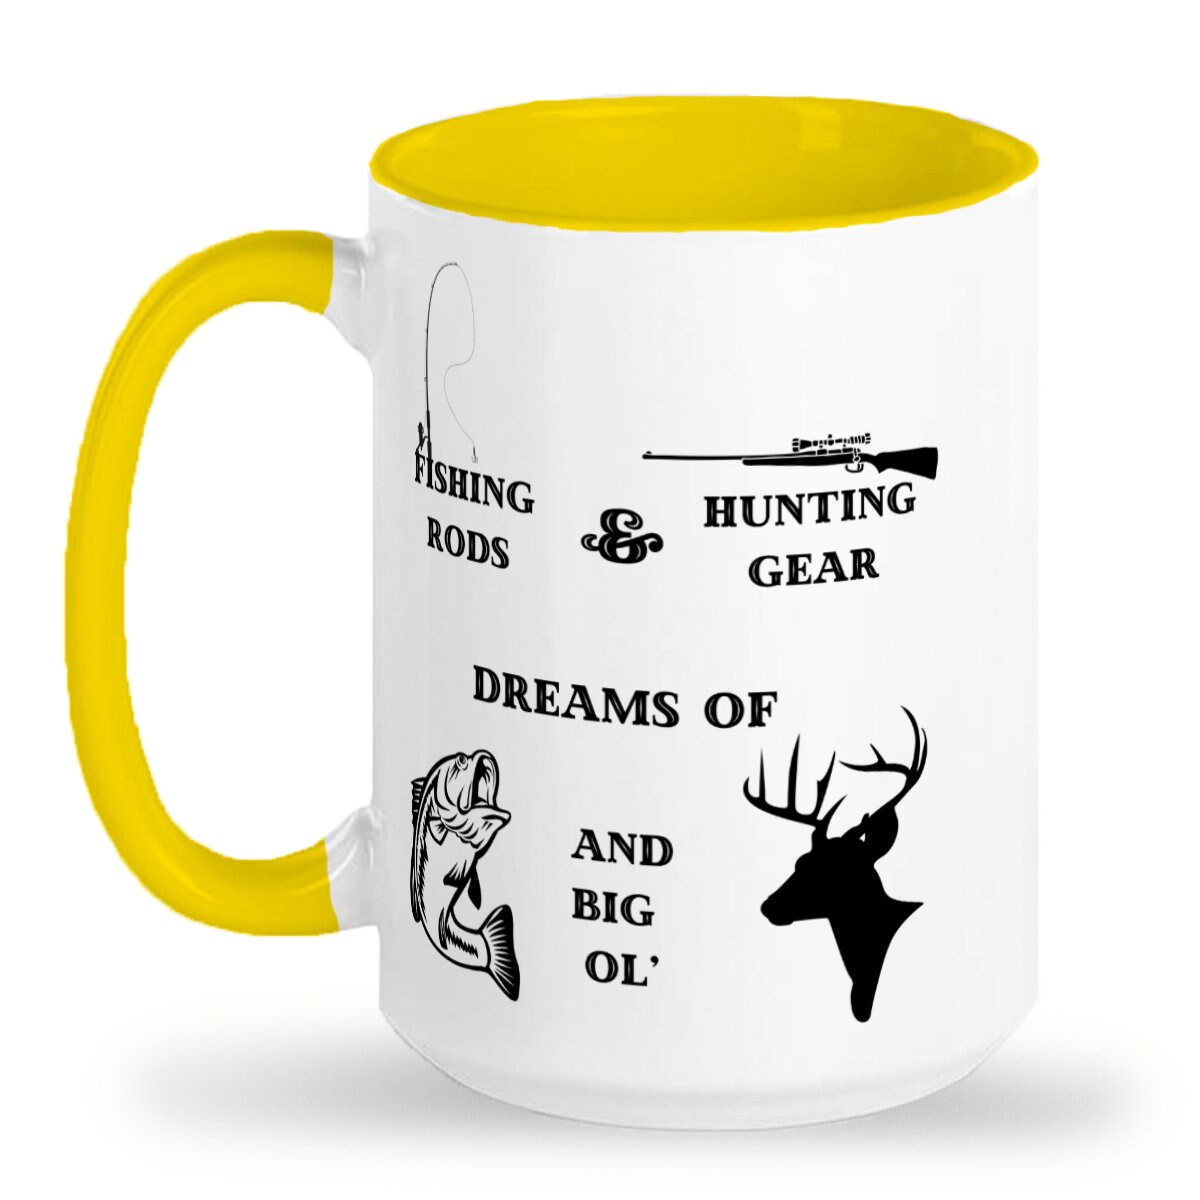 Hunting gifts fishing poles and hunting gears birthday christmas gift idea  for men women travel mug